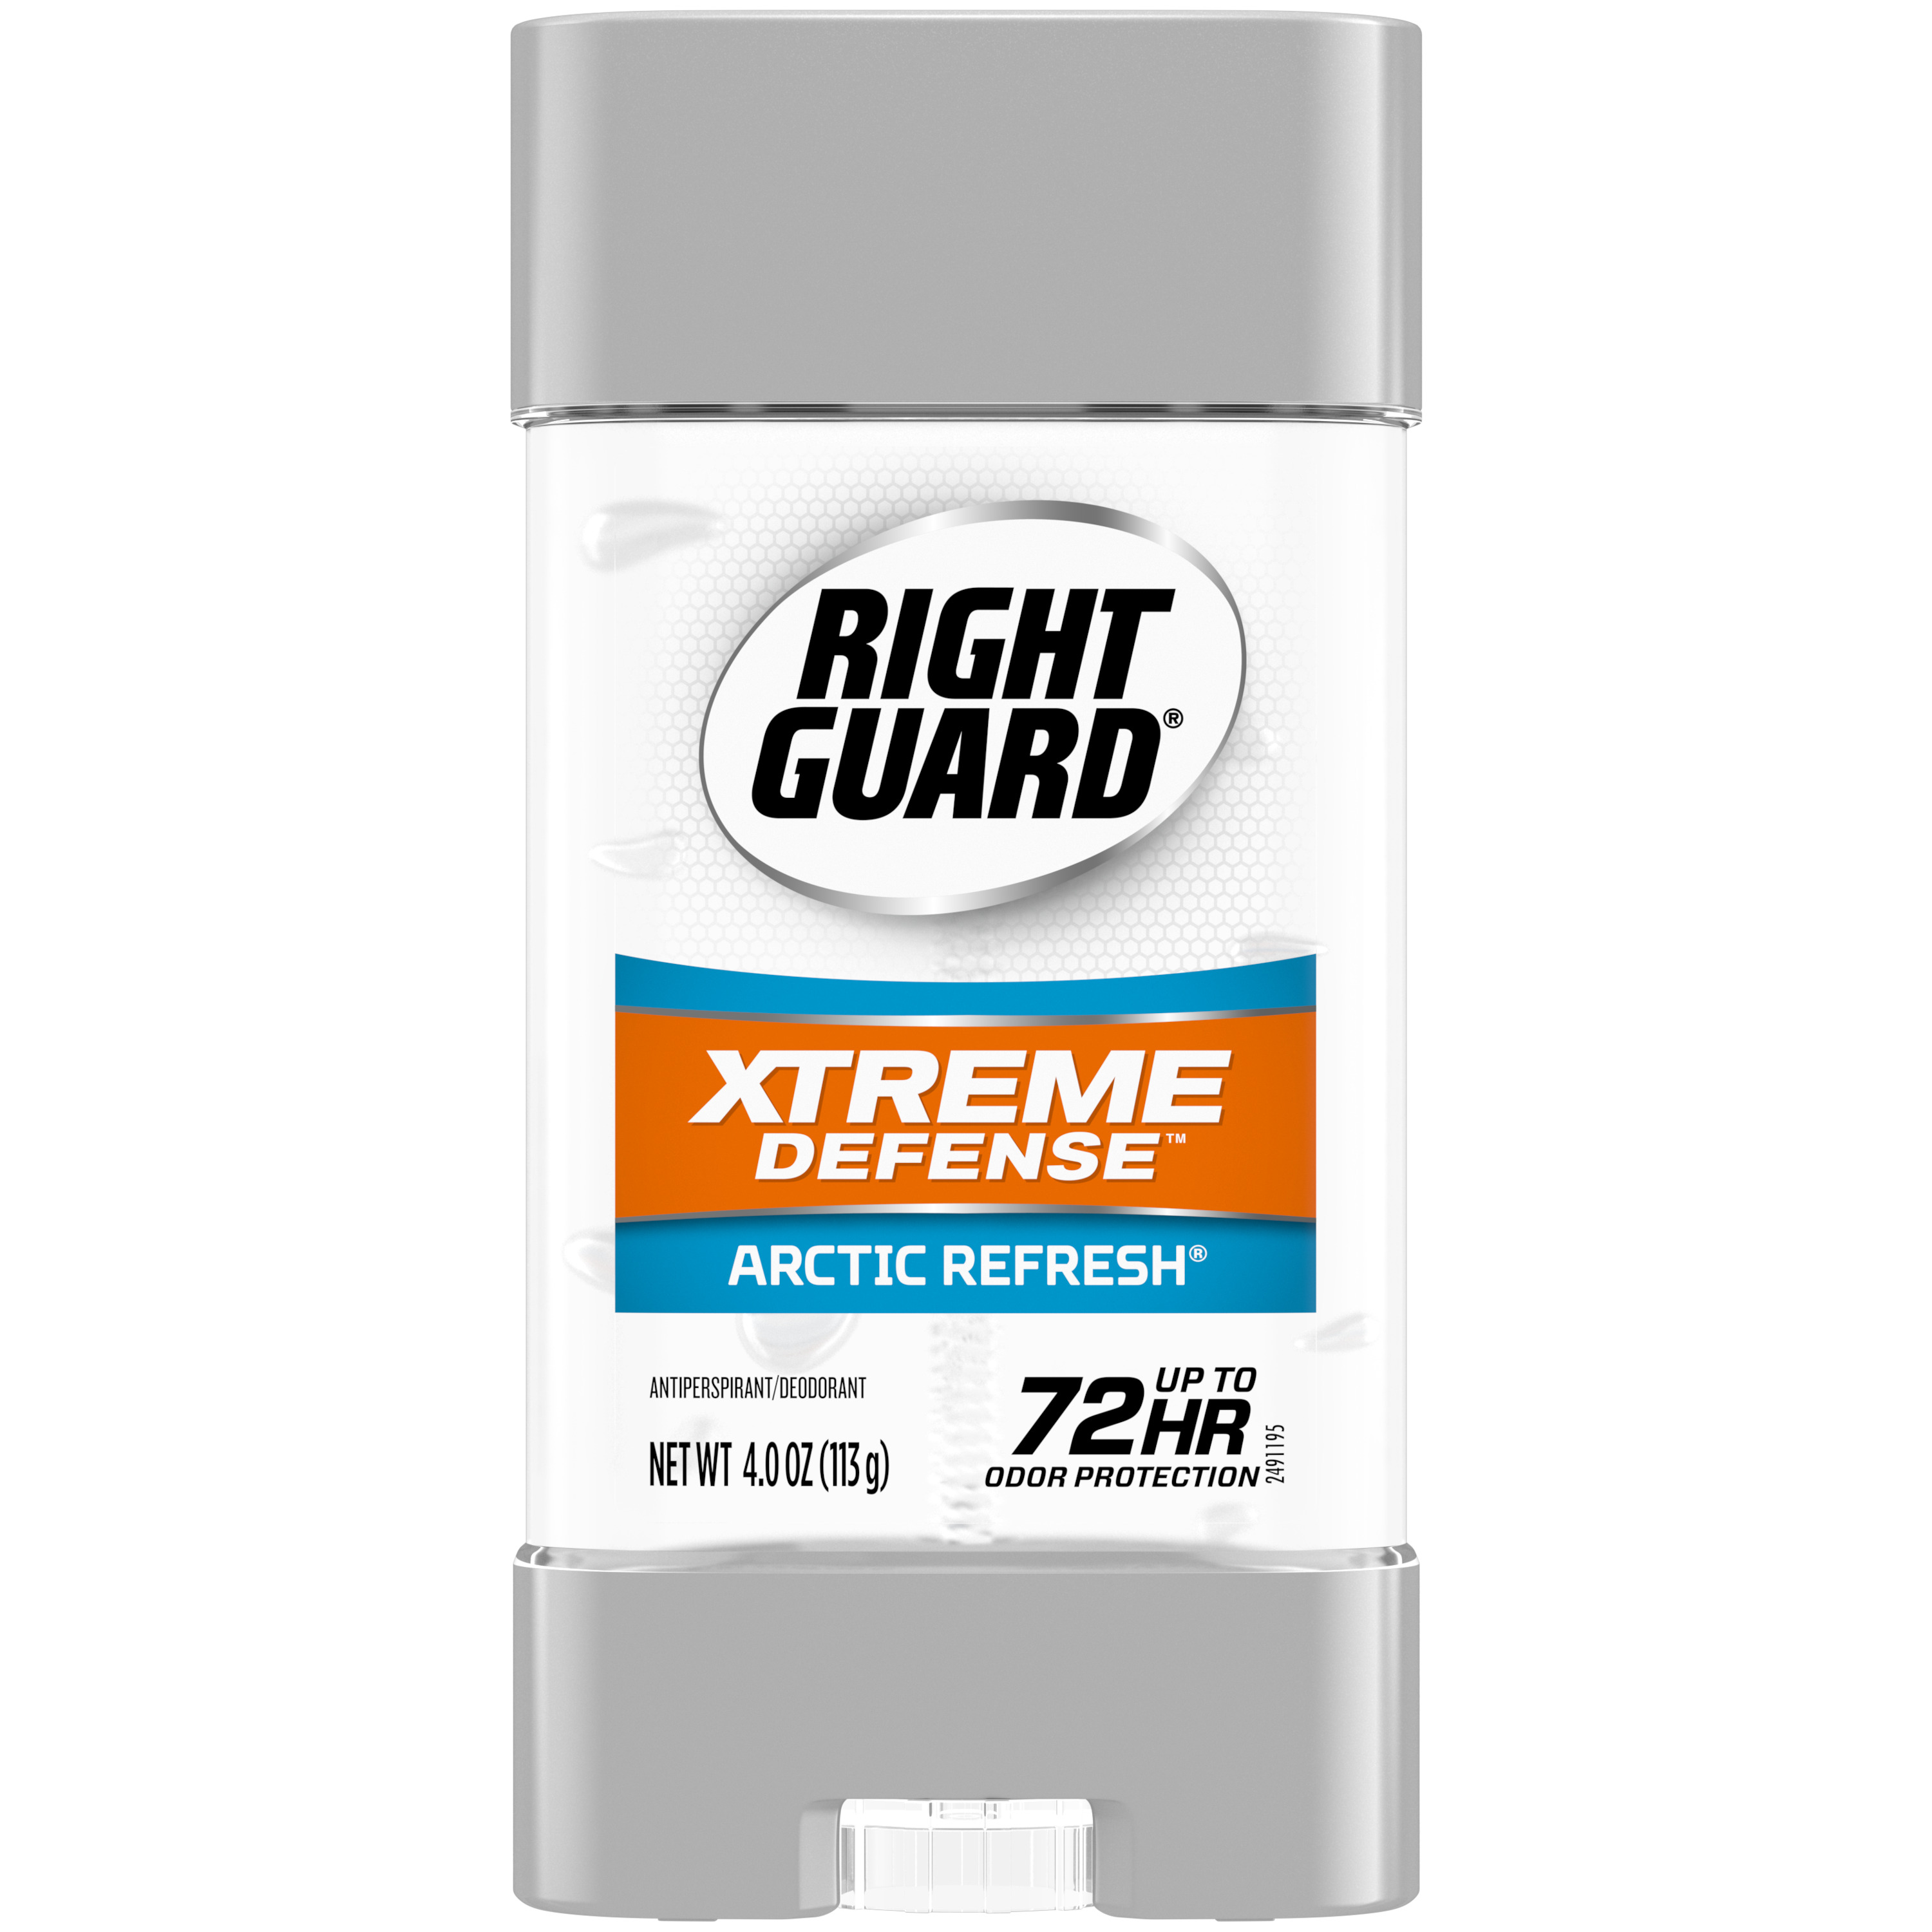 Right Guard Xtreme Defense Antiperspirant Deodorant Gel, Arctic Refresh, 4 oz - image 1 of 6